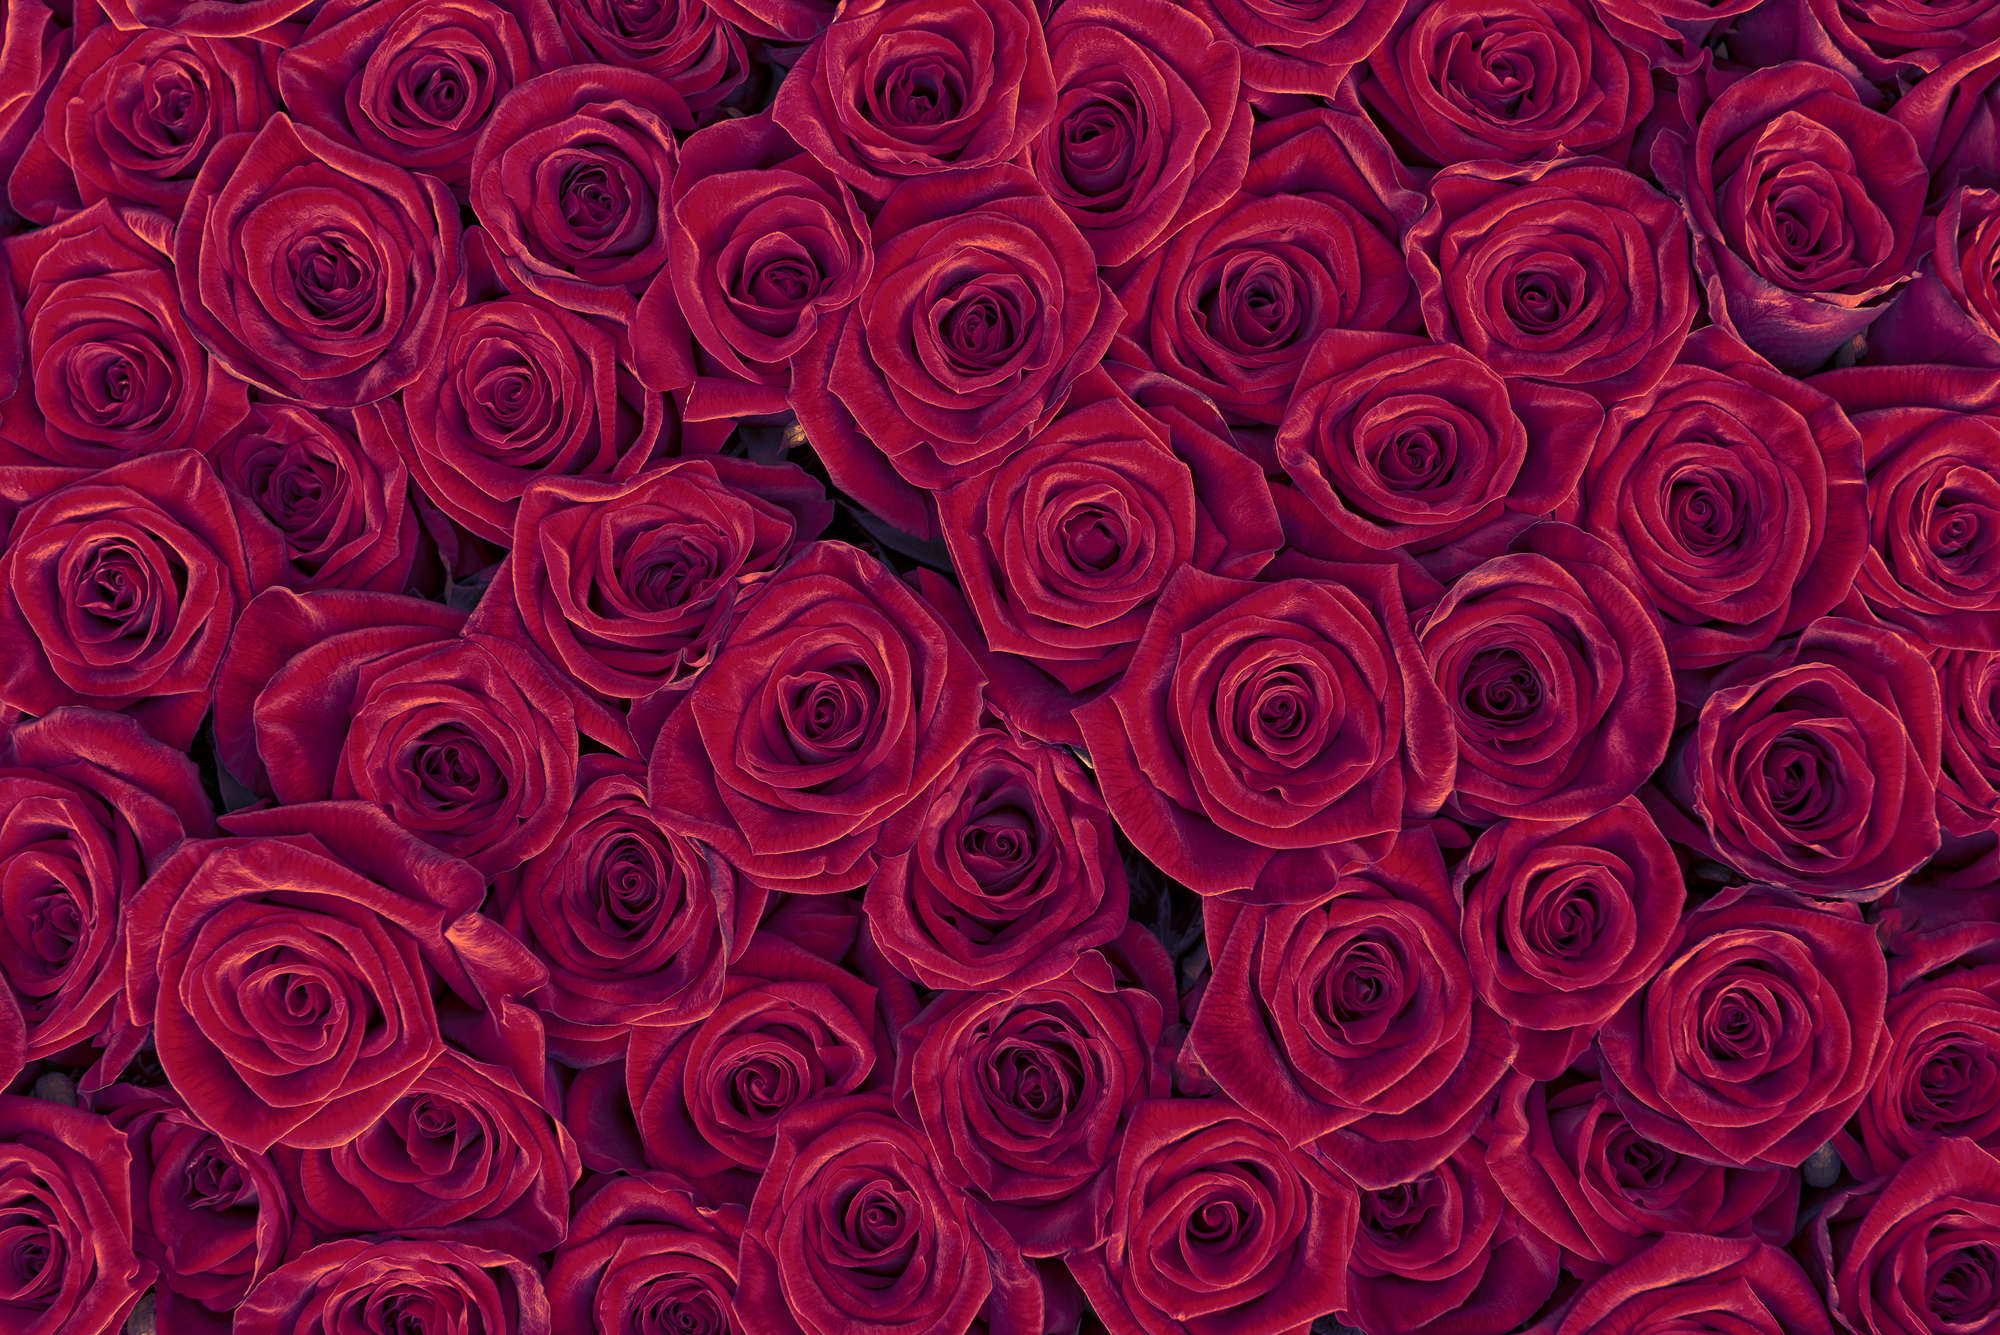             Carta da parati per piante Rose rosse su vello liscio opaco
        